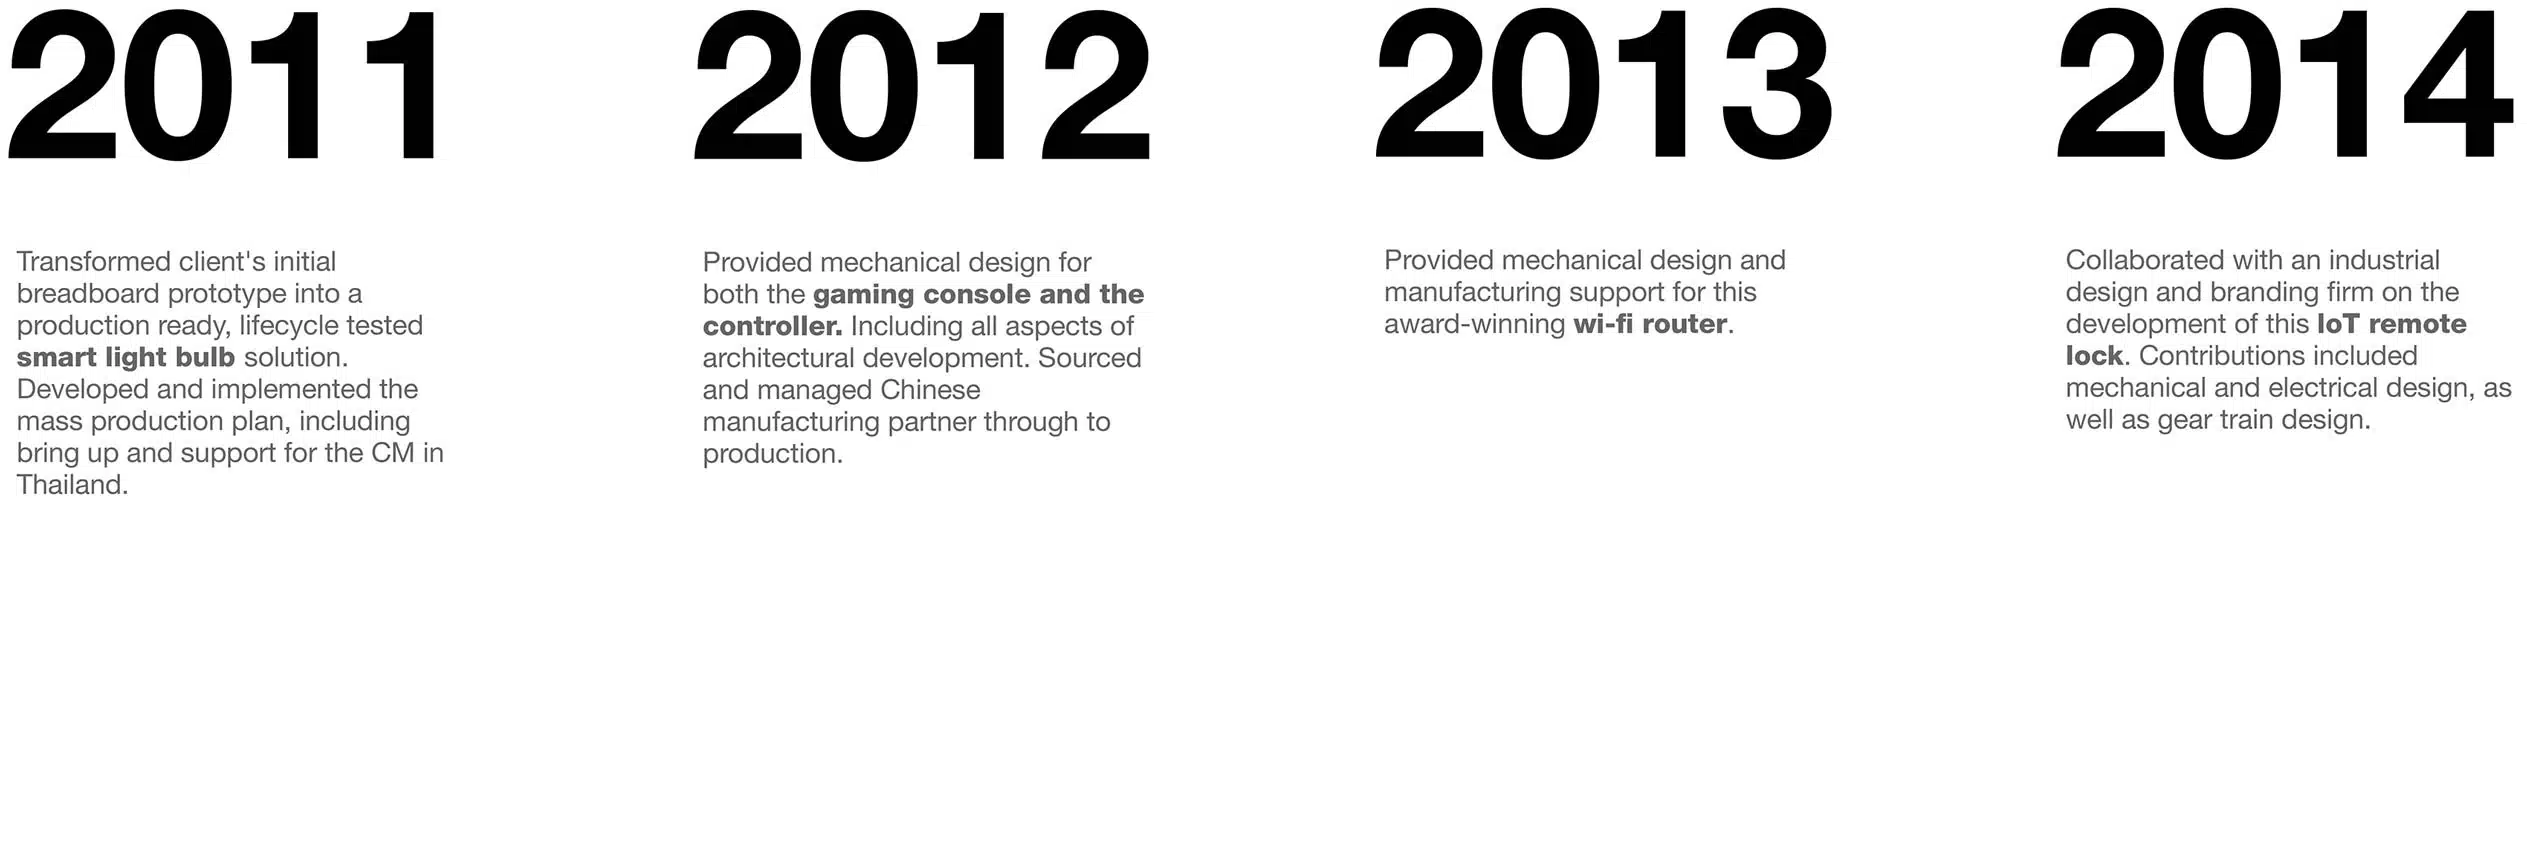 Surfaceink Timeline 2011-2014